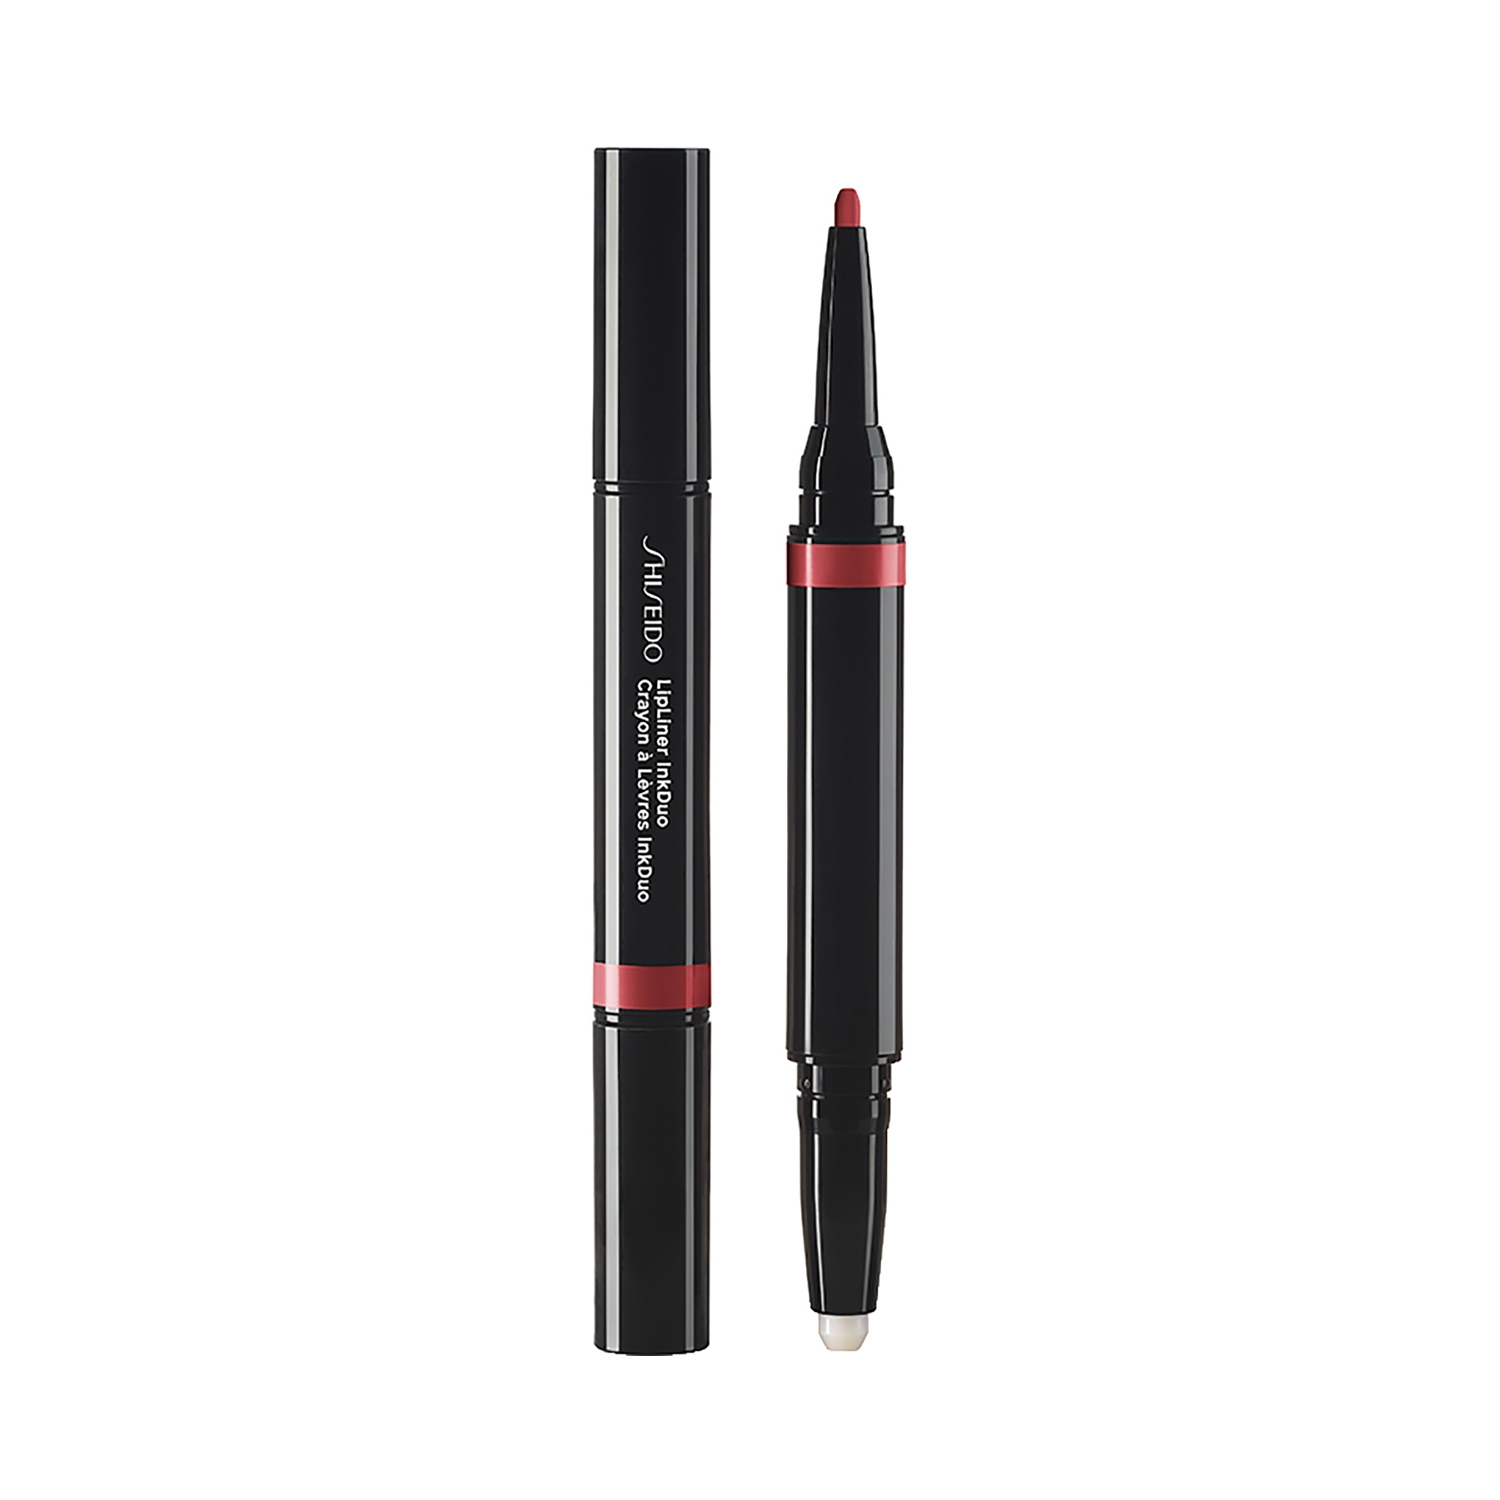 Shiseido | Shiseido Inkduo Prime and Line Duo Lipliner - 09 Scarlet (1.1g)